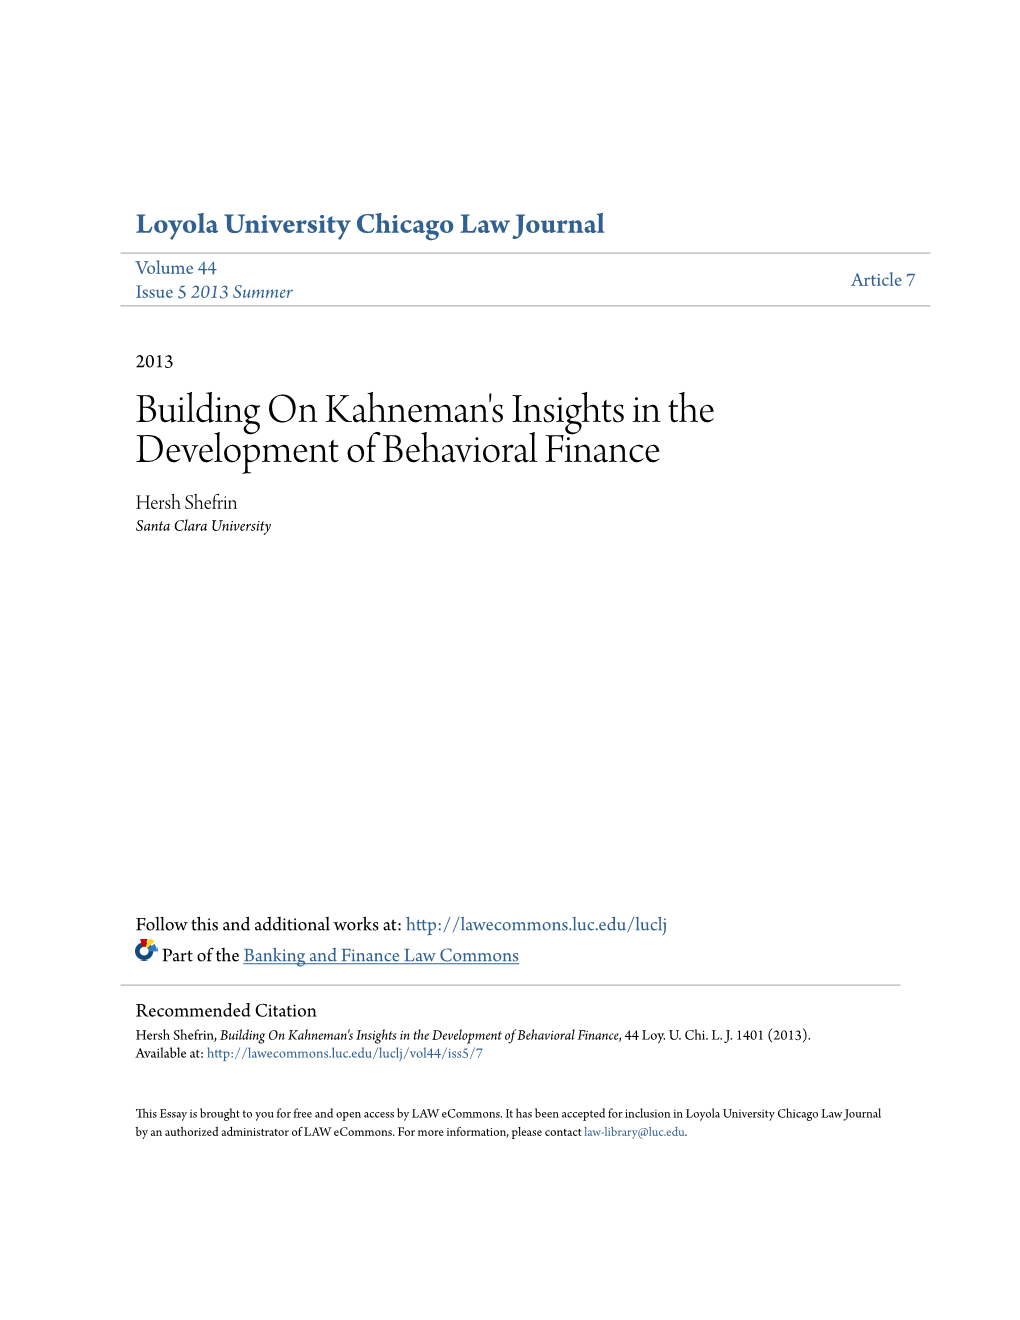 Building on Kahneman's Insights in the Development of Behavioral Finance Hersh Shefrin Santa Clara University